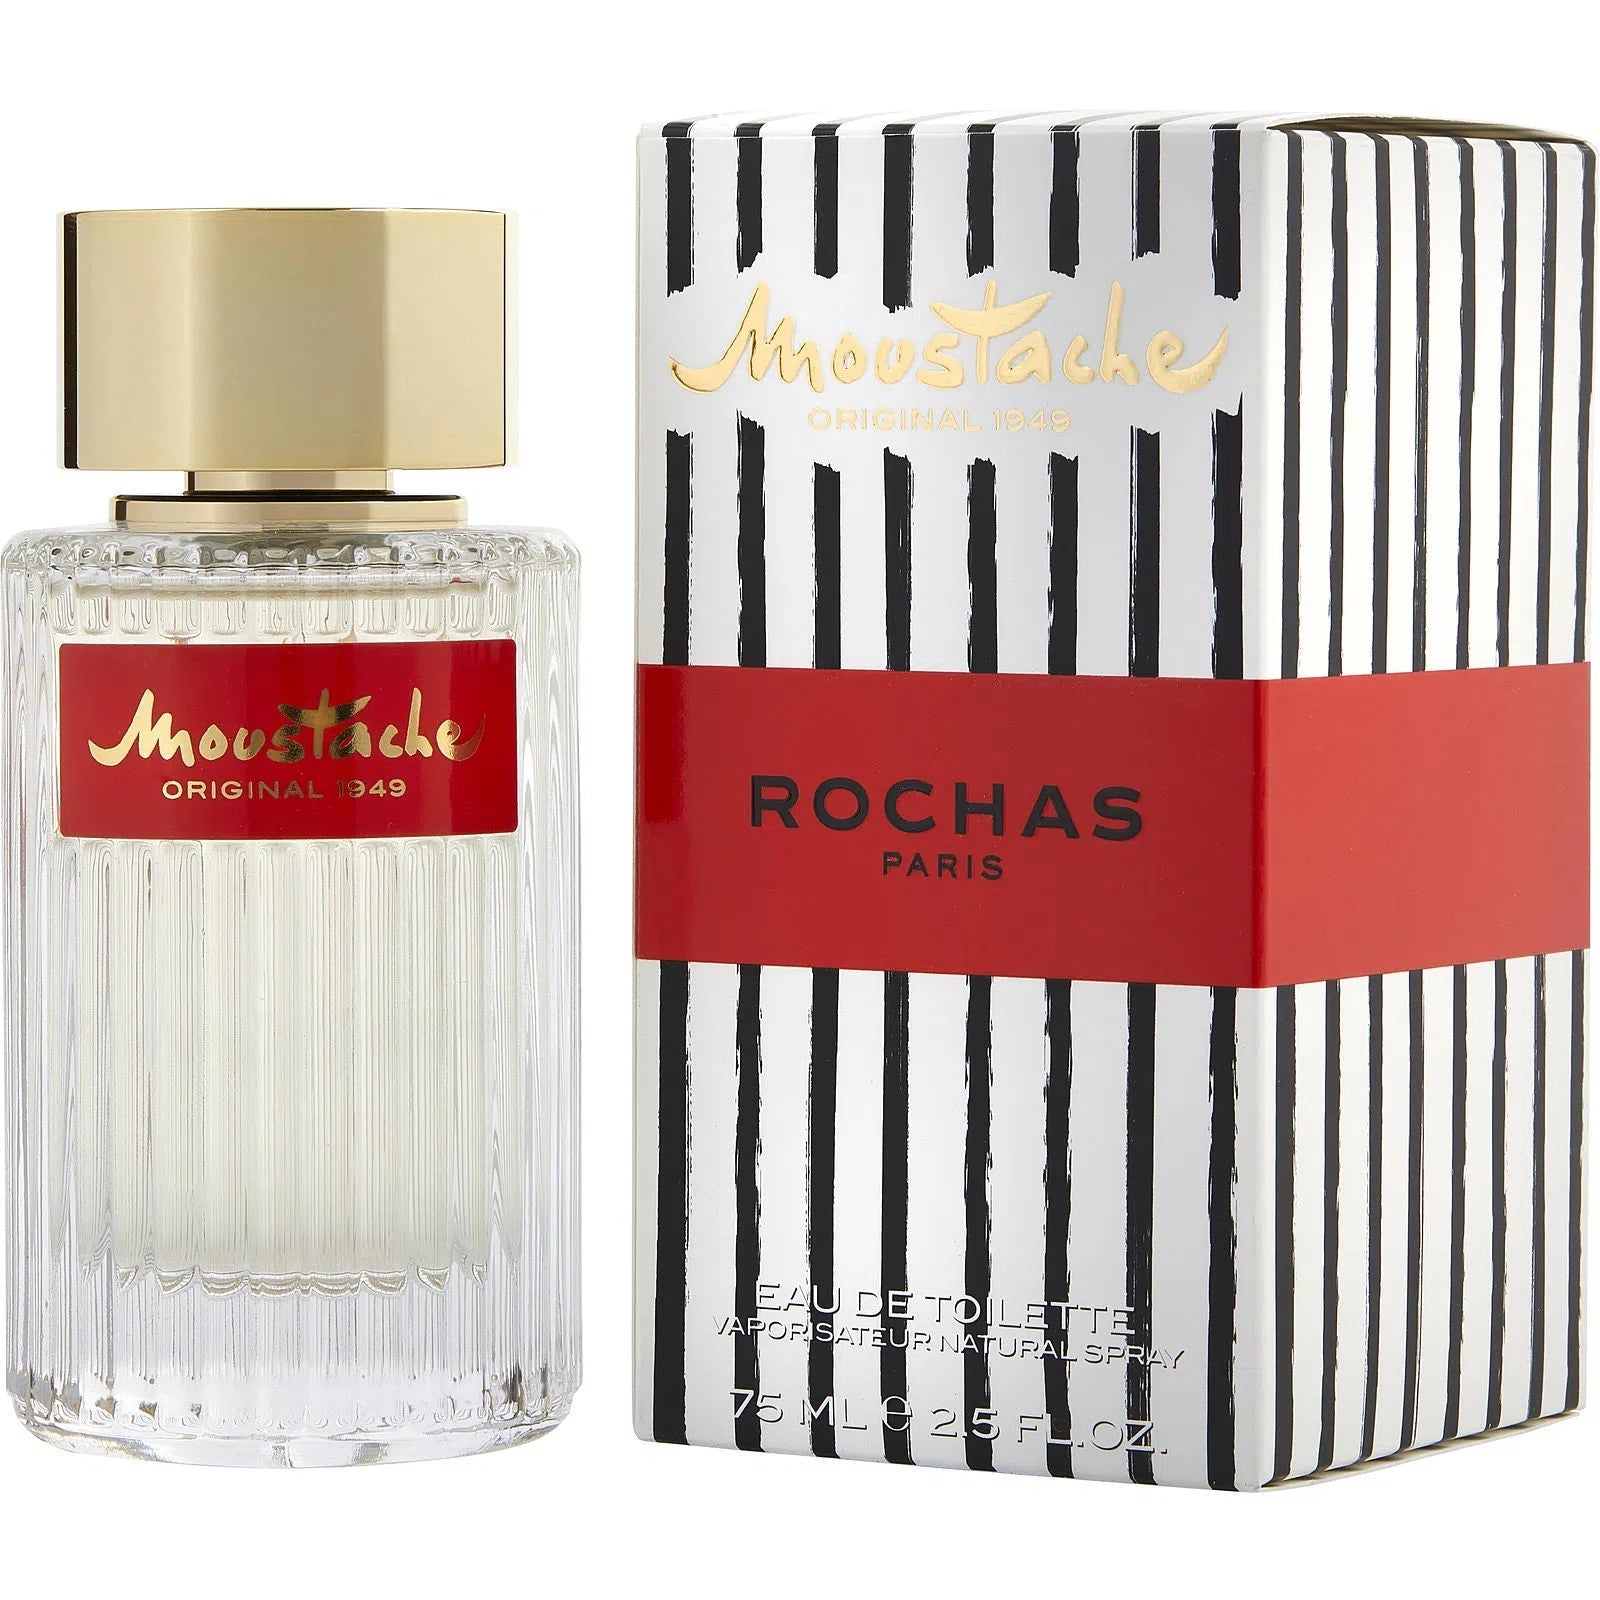 Perfume Rochas Moustache EDT (M) / 75 ml - 3386460102971- Prive Perfumes Honduras